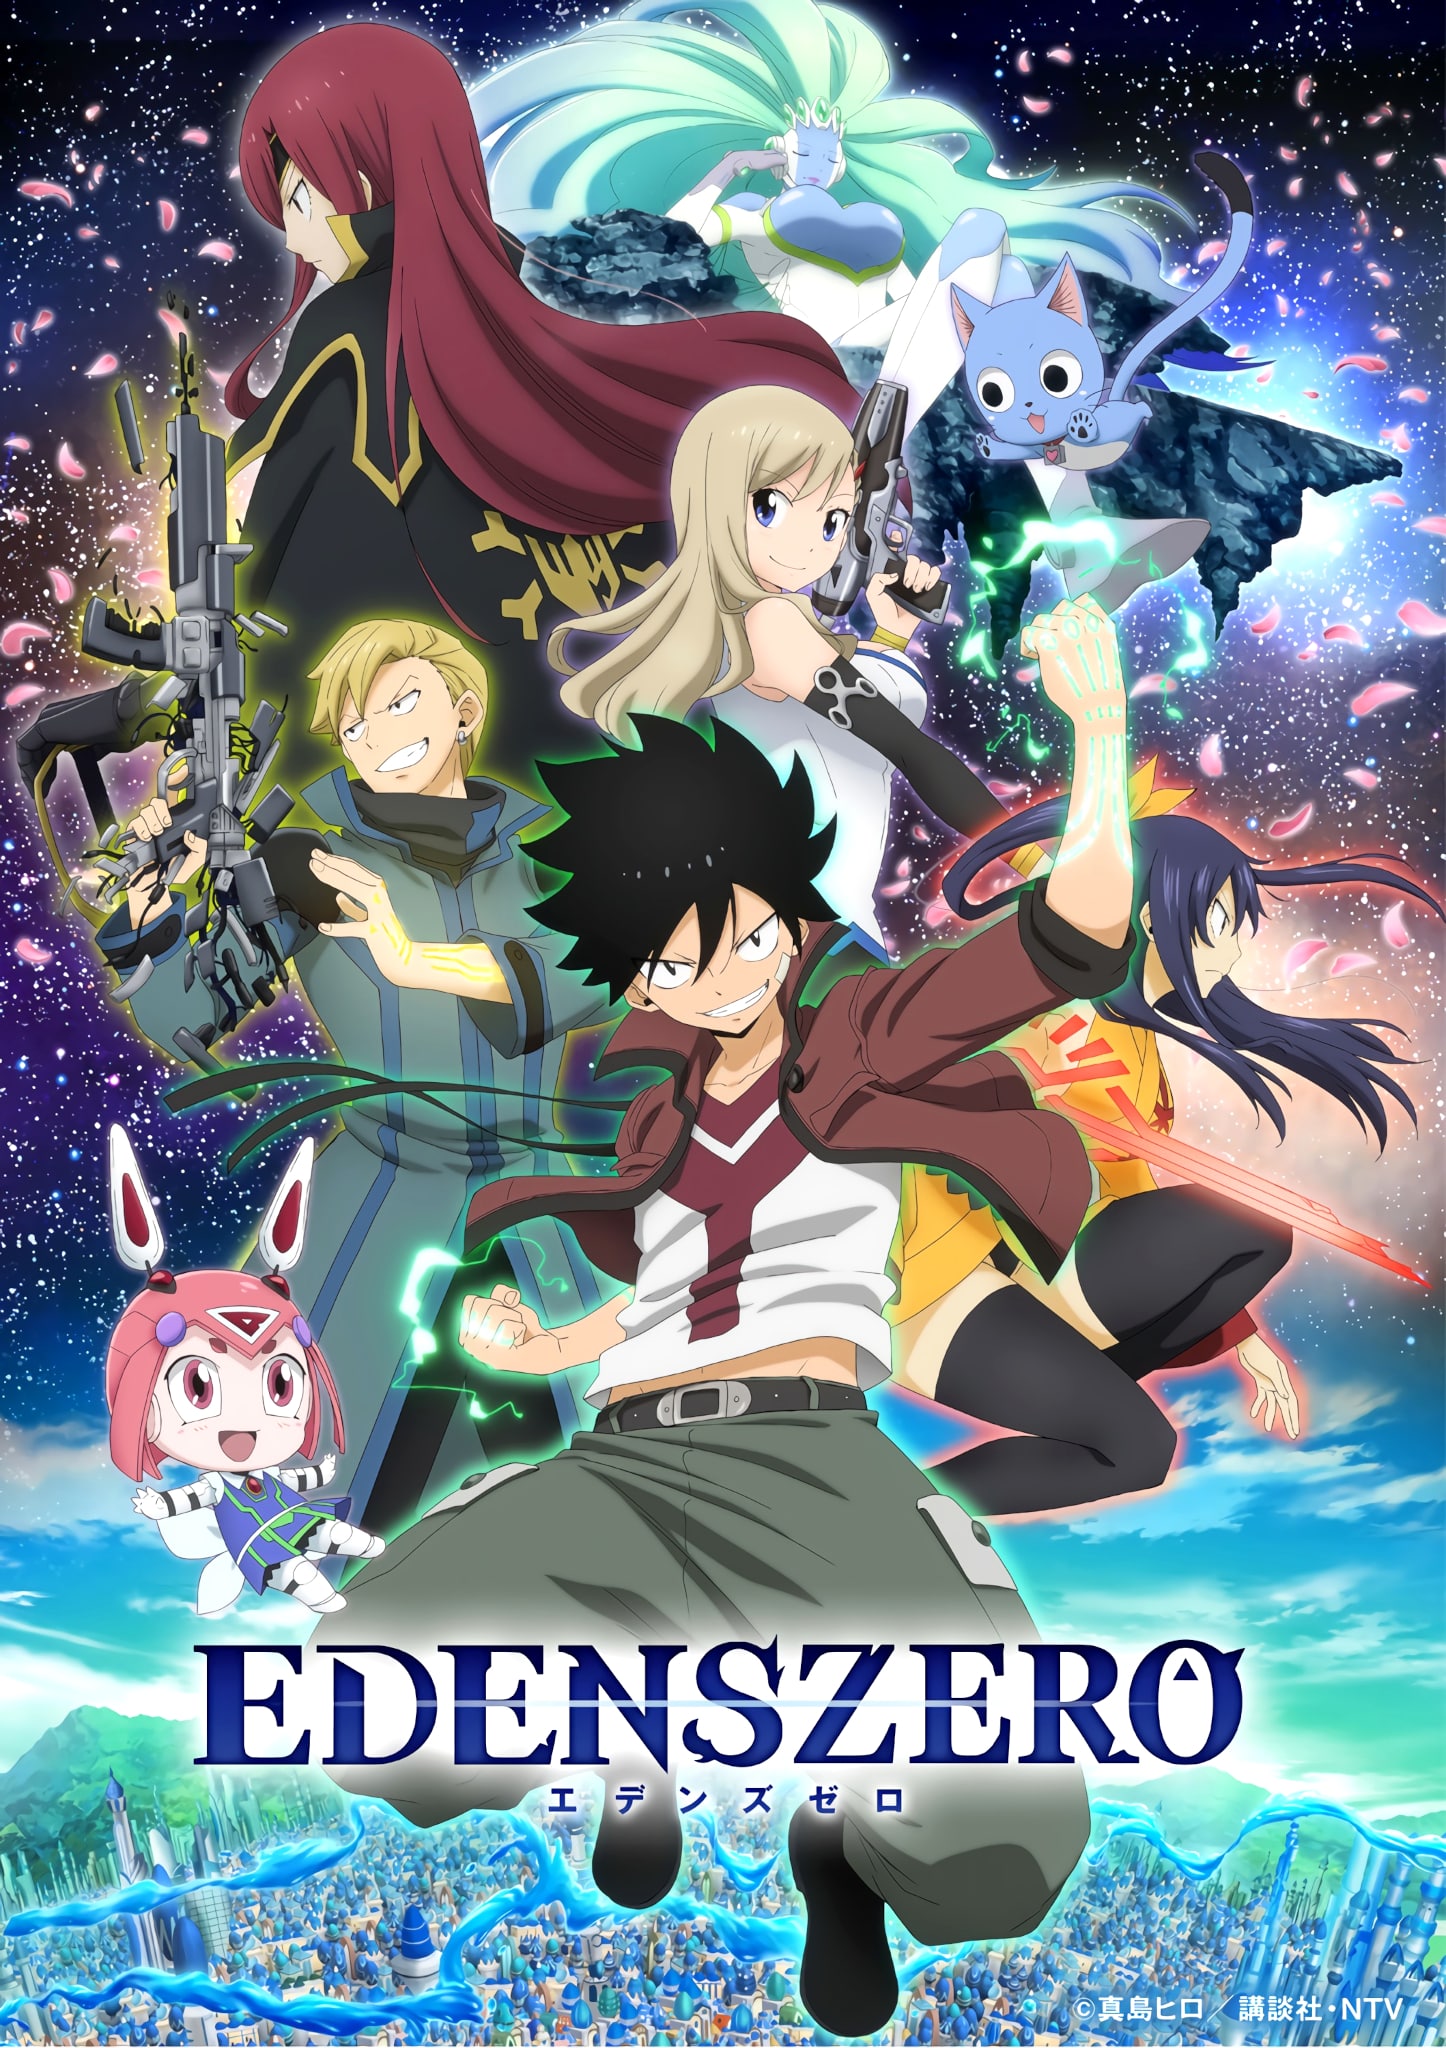 Premier visuel pour anime Edens Zero